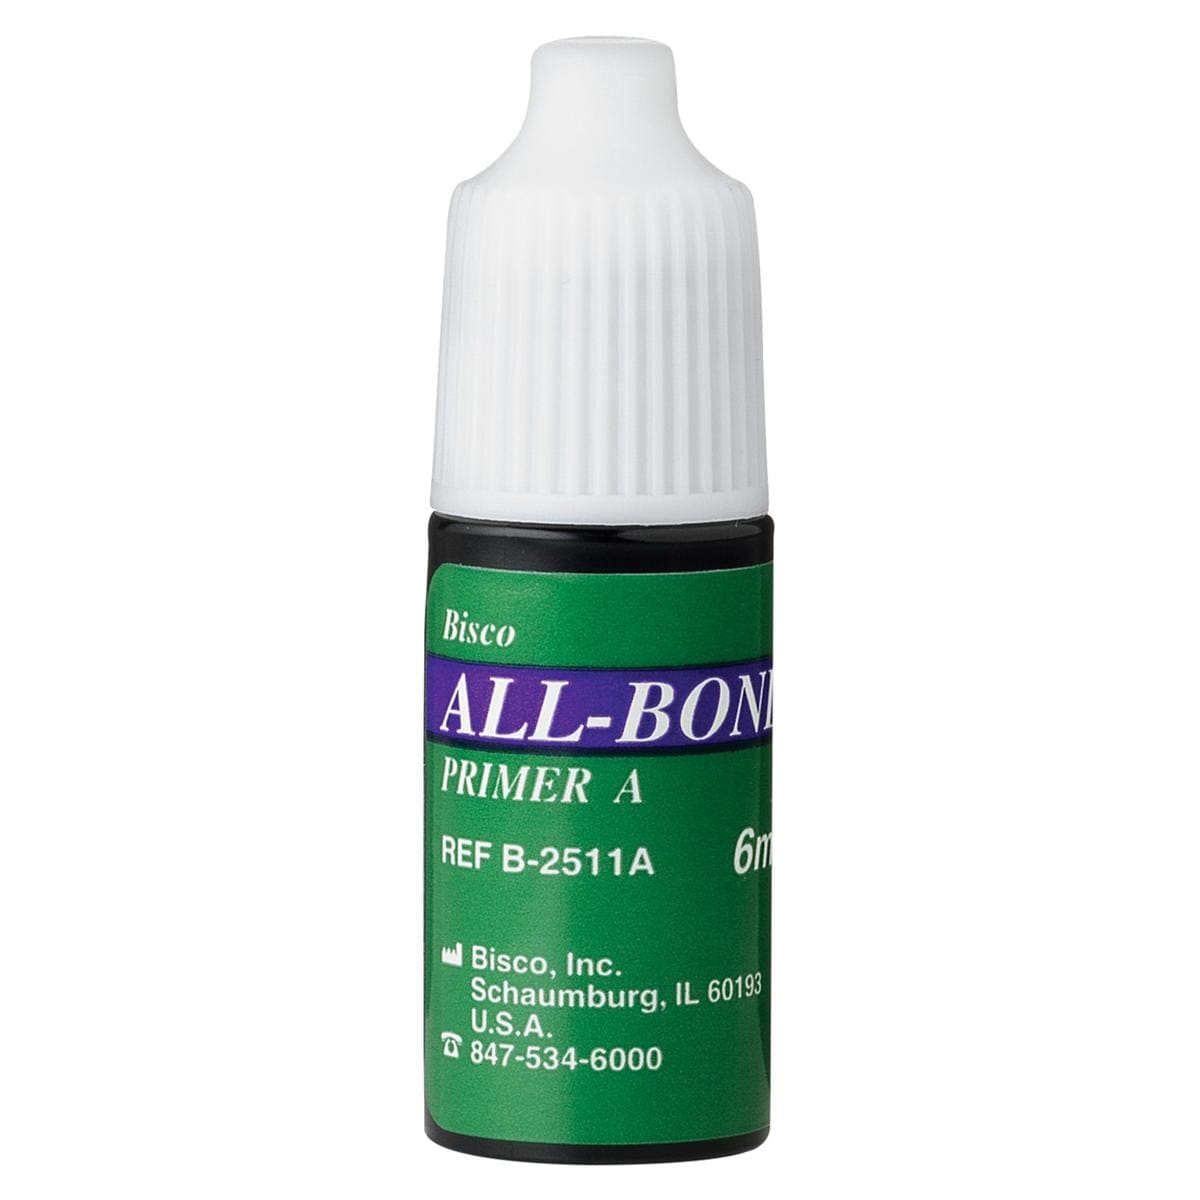 All-Bond 2 - universal dental adhesive system - Primer A, 6 ml